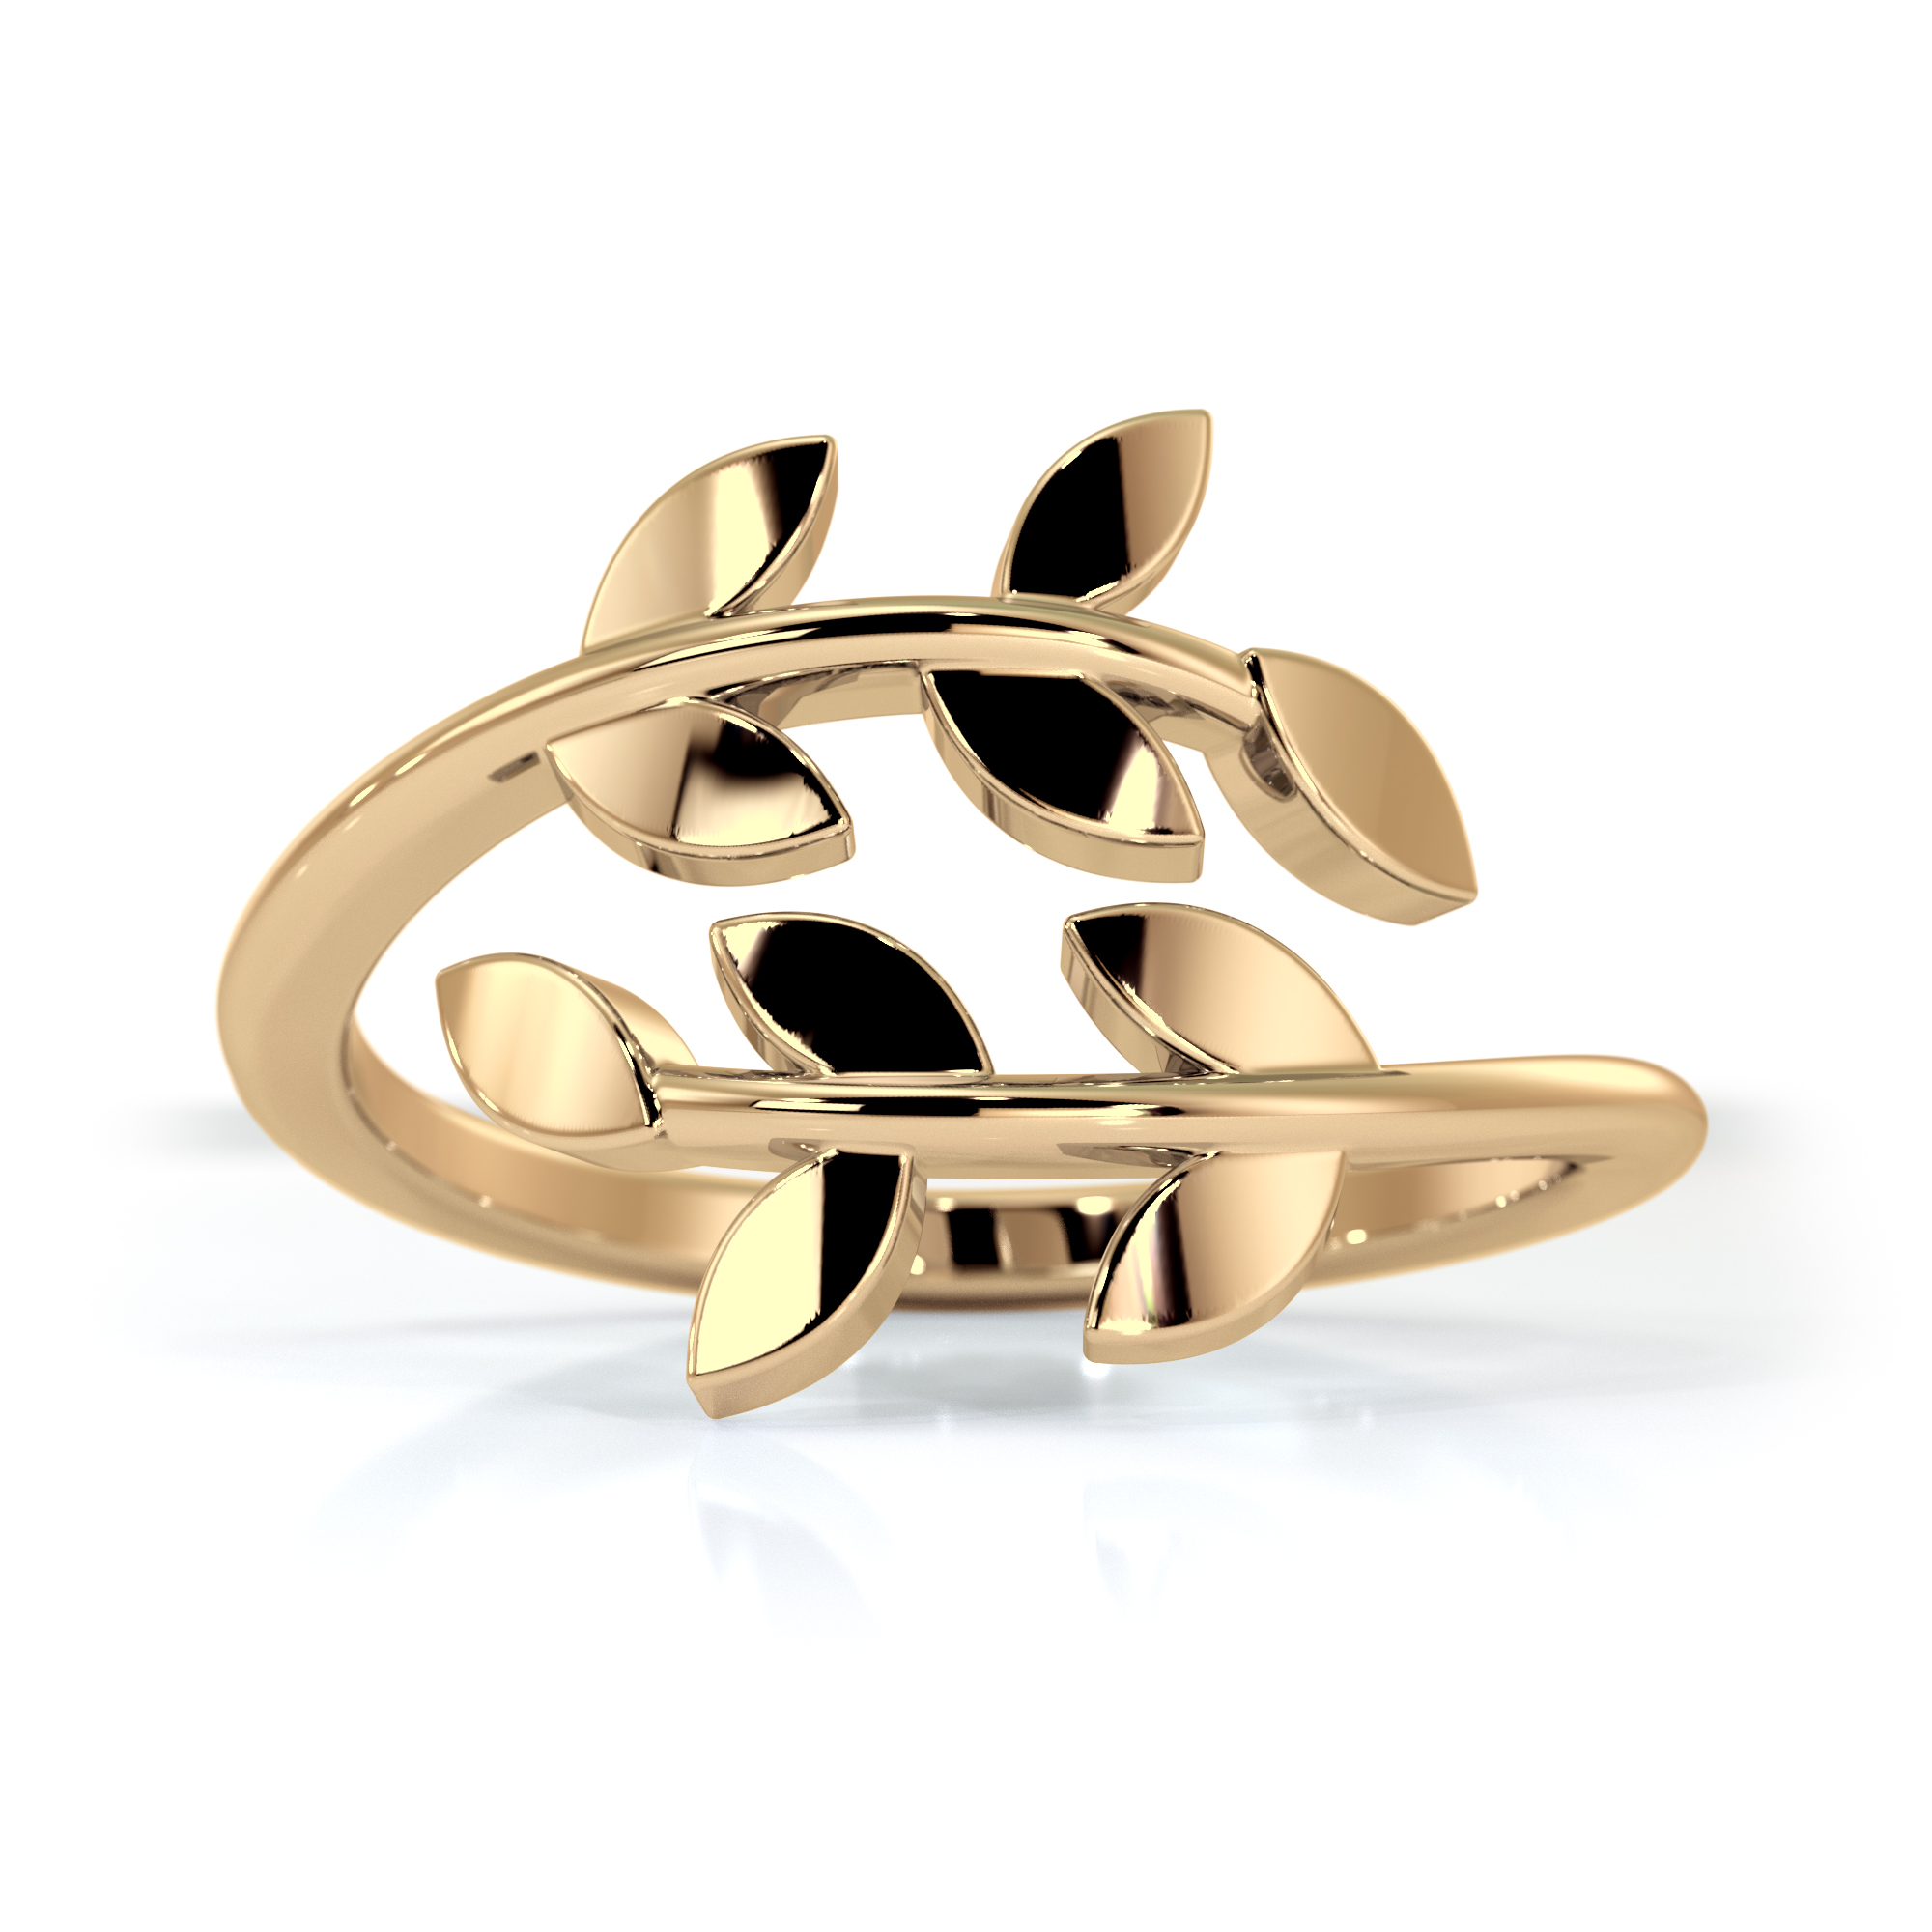 Sparkling Leaf Fashion Ring in Gold, Platinum or Silver